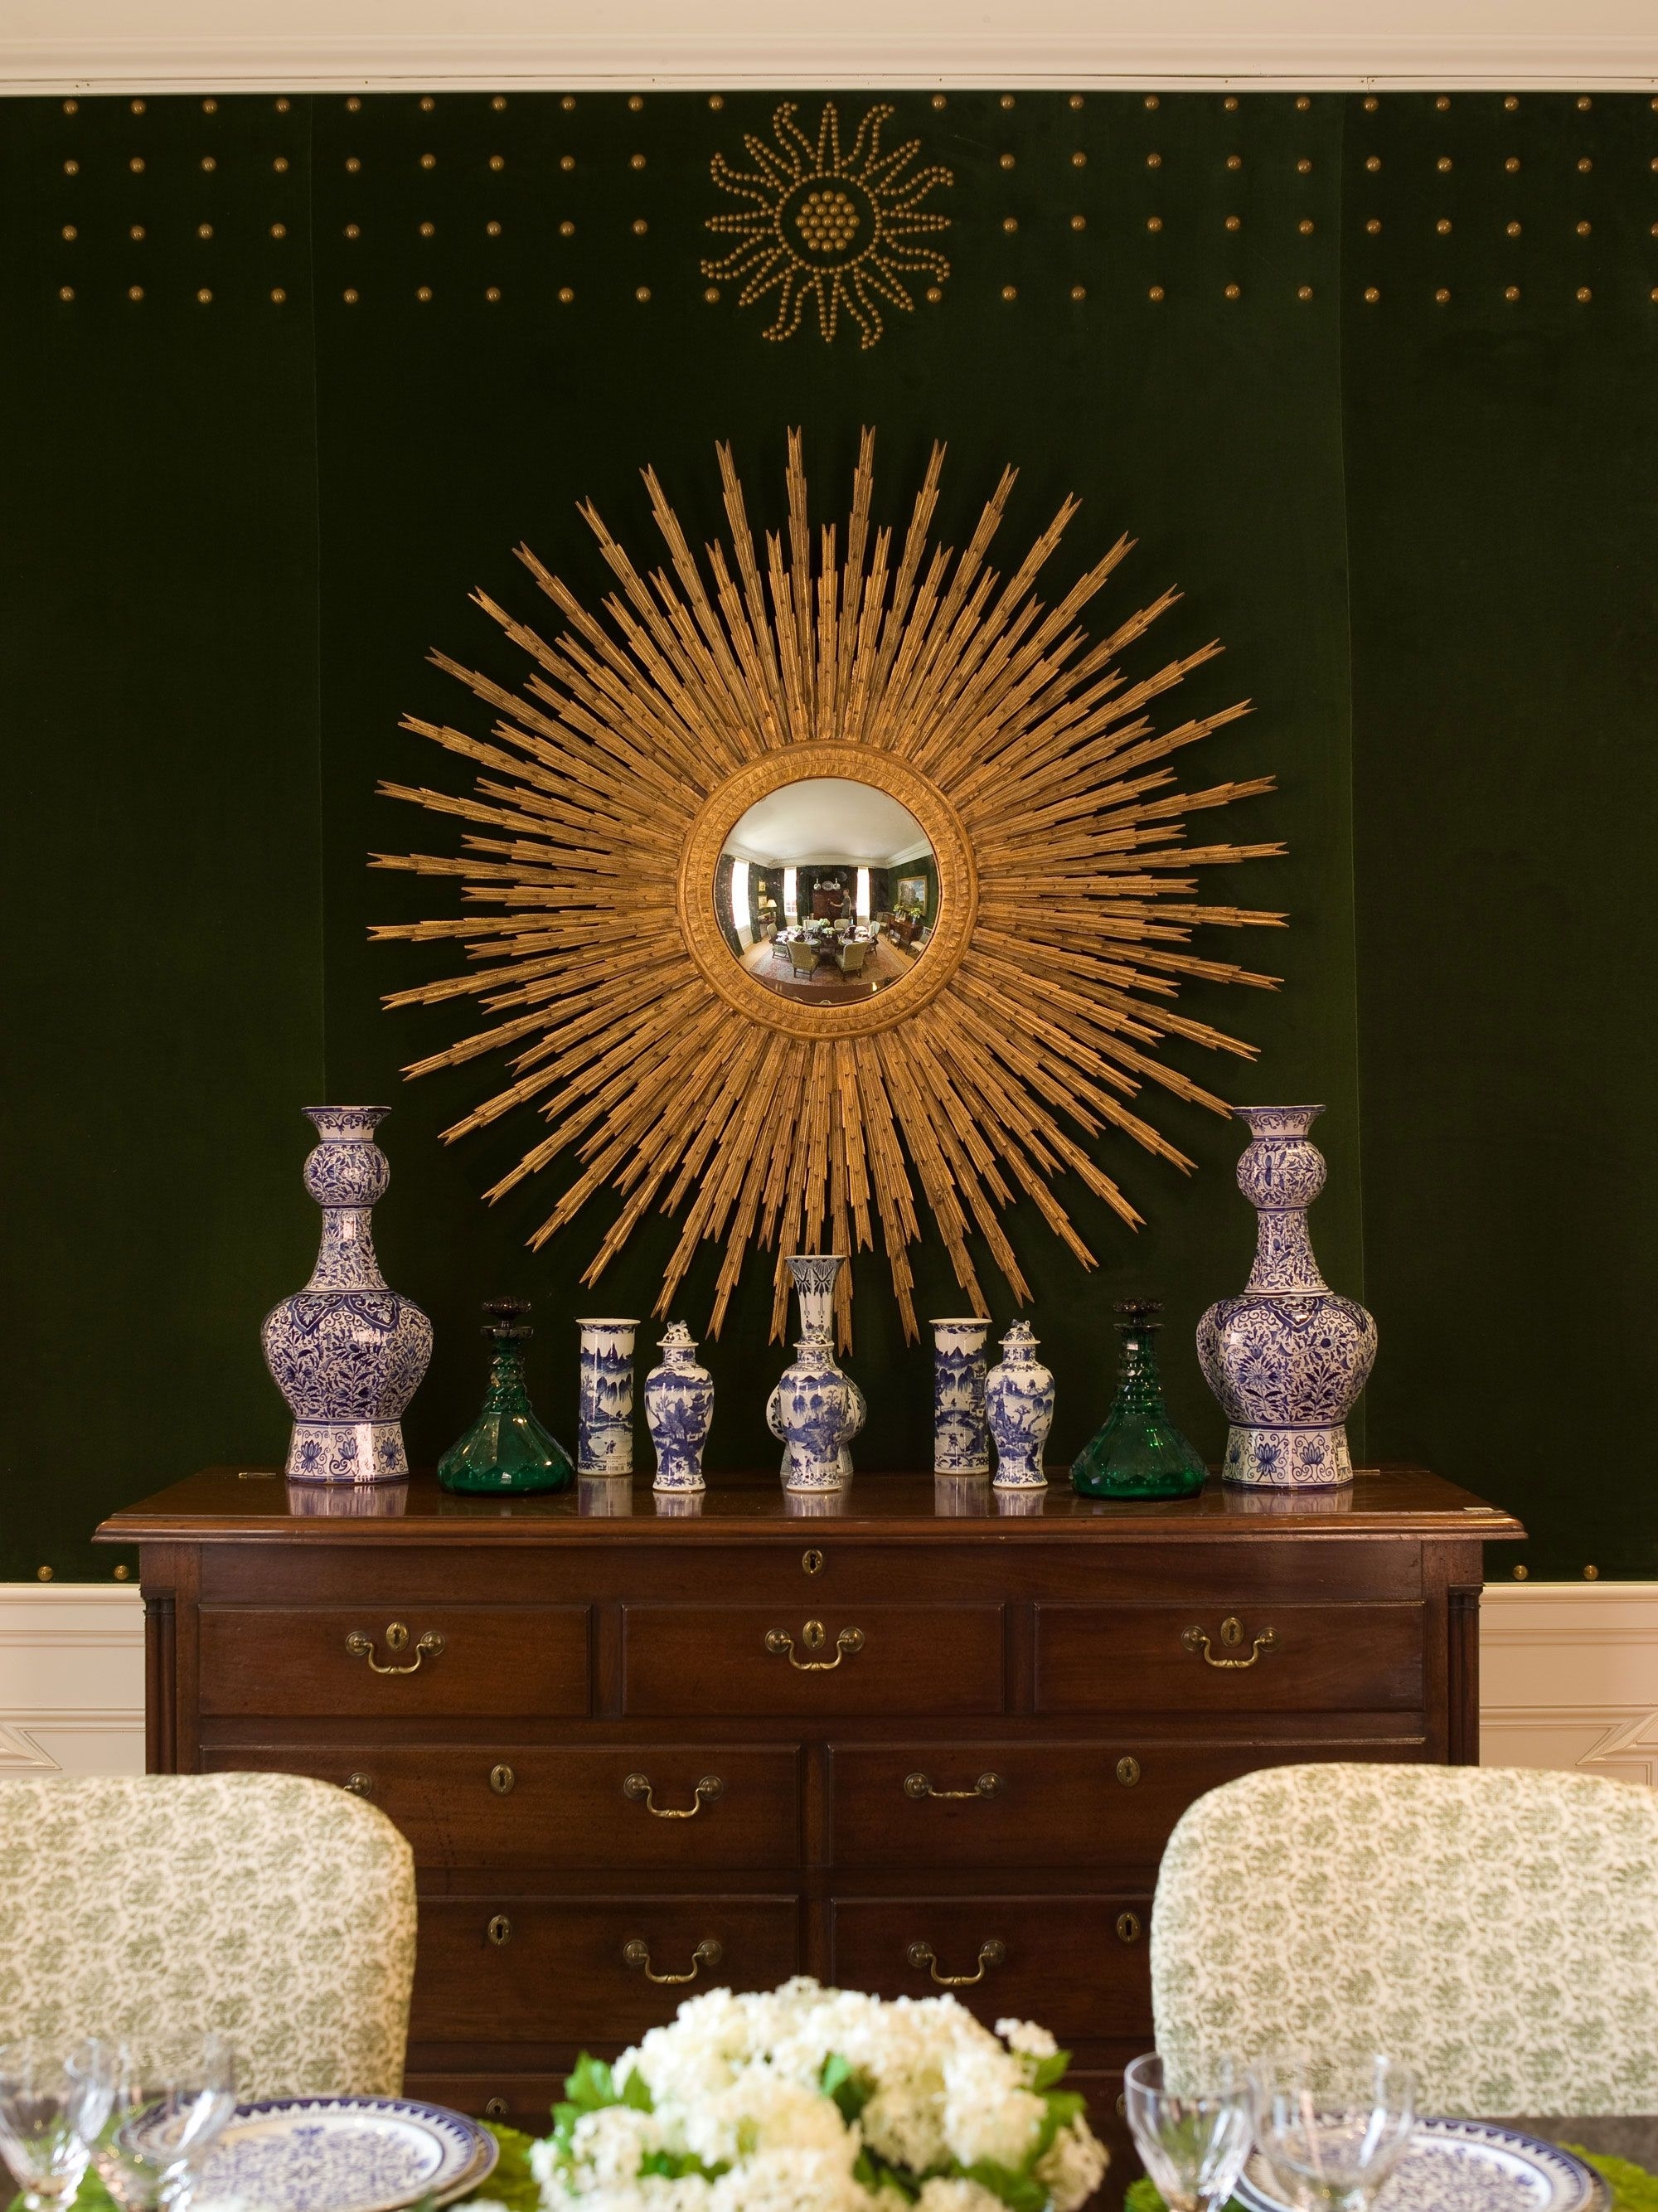 MCDFL Sun Mirror Gold Round Decorative Wall Sunburst Mirrors Home